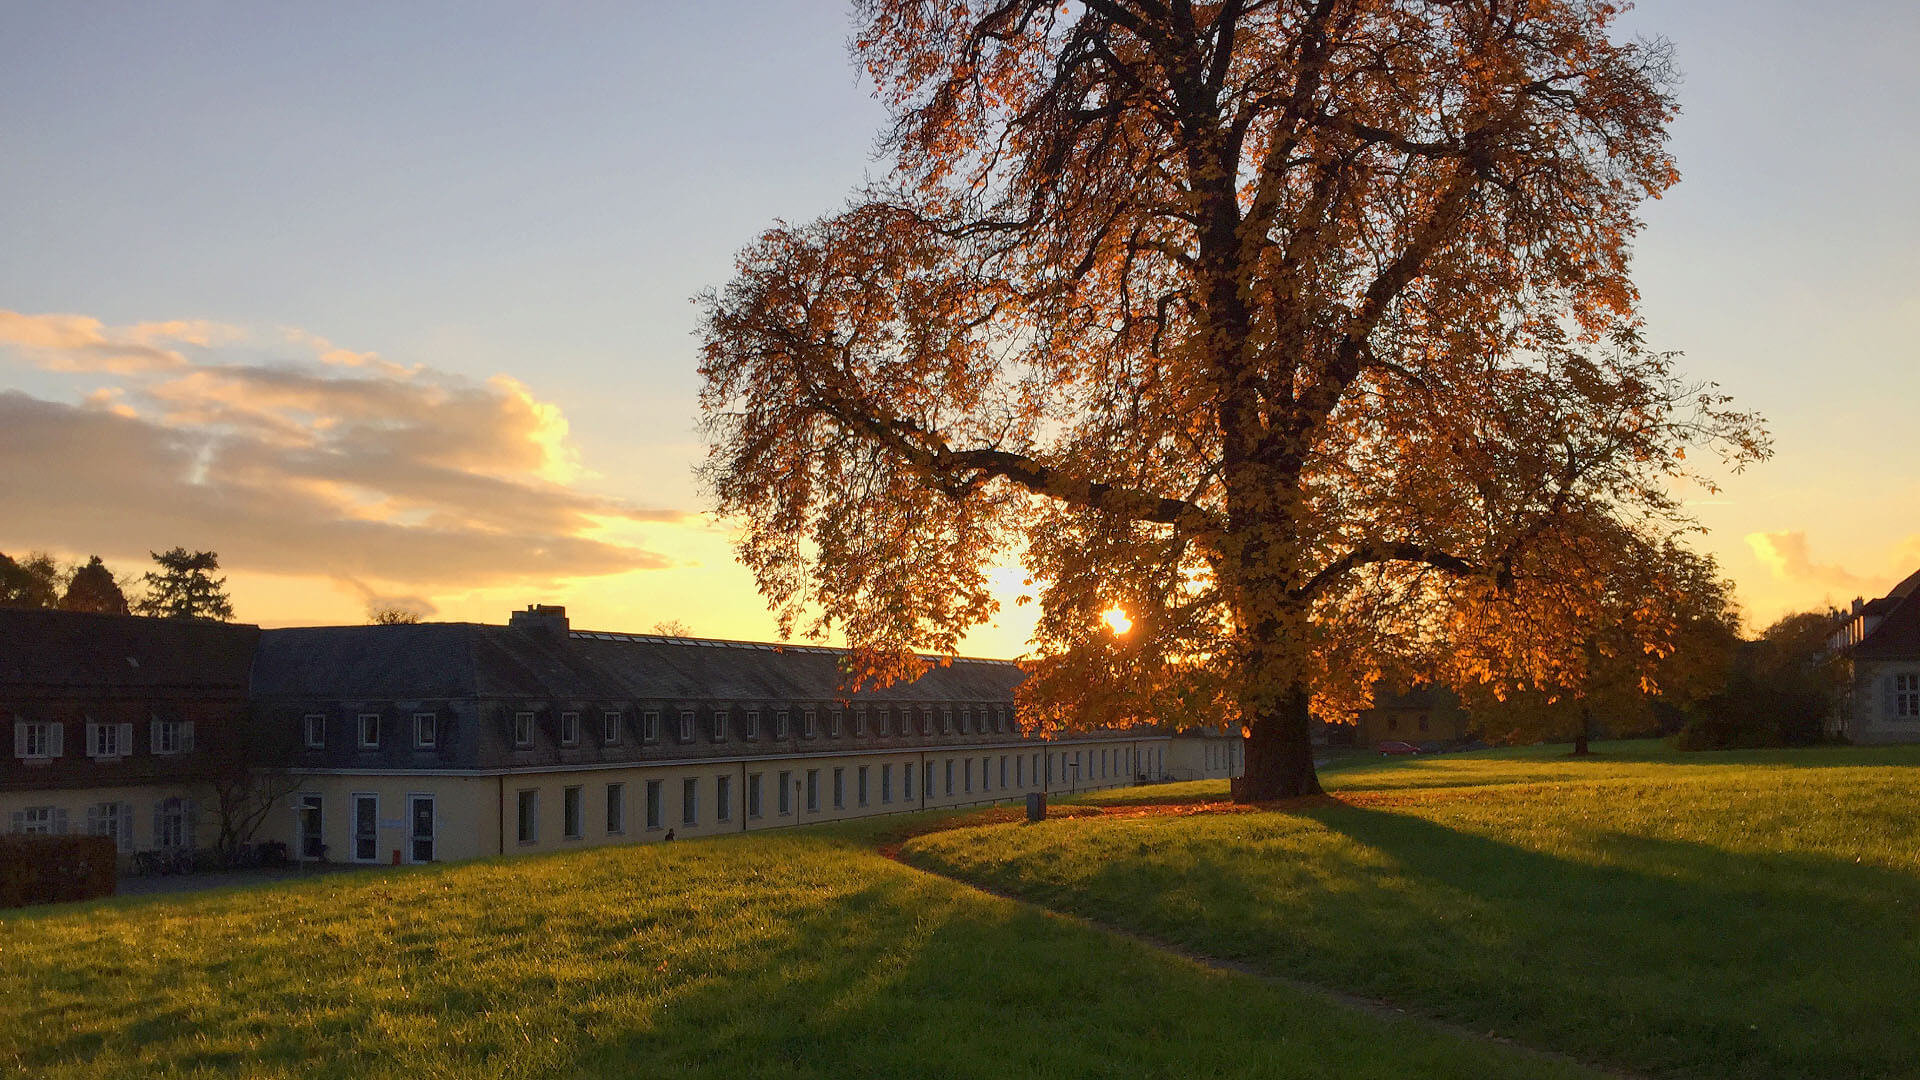 The campus of university of hohenheim at sunset in autumn